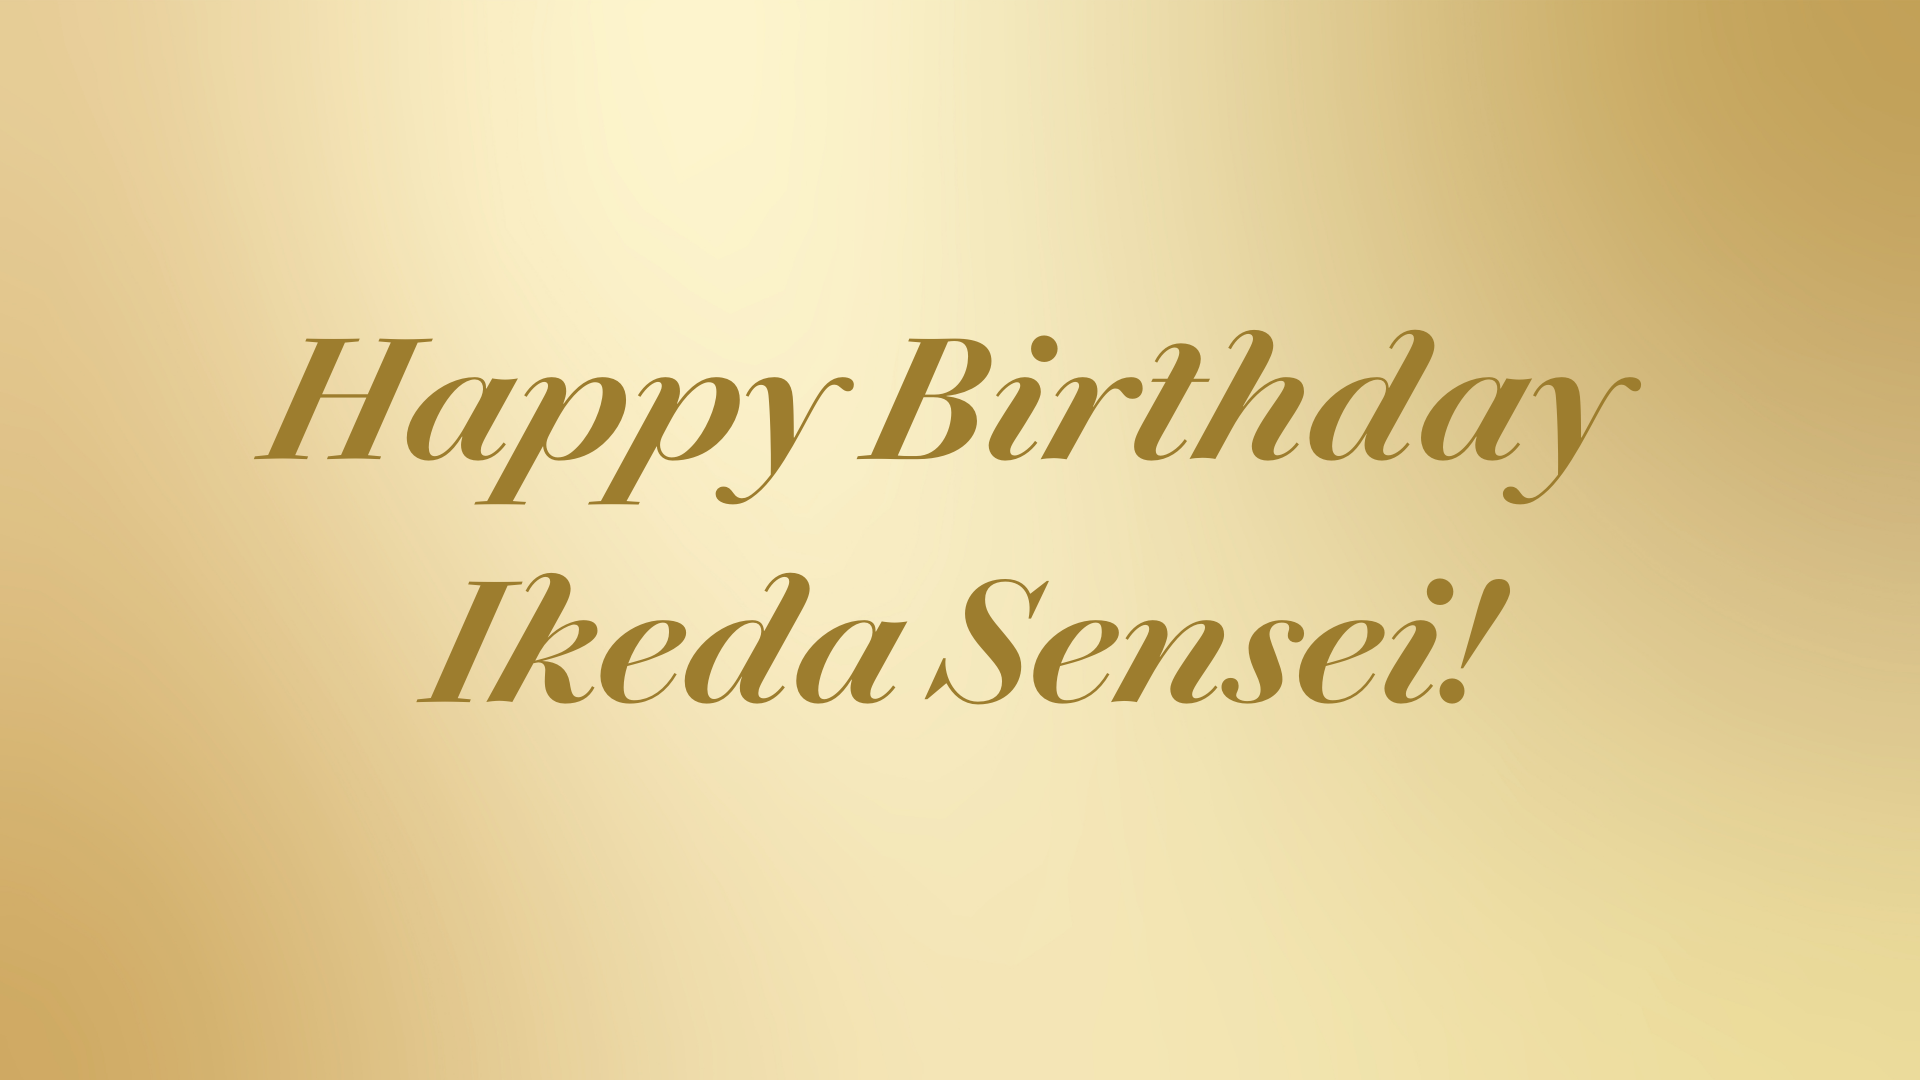 Happy Birthday, Ikeda Sensei!